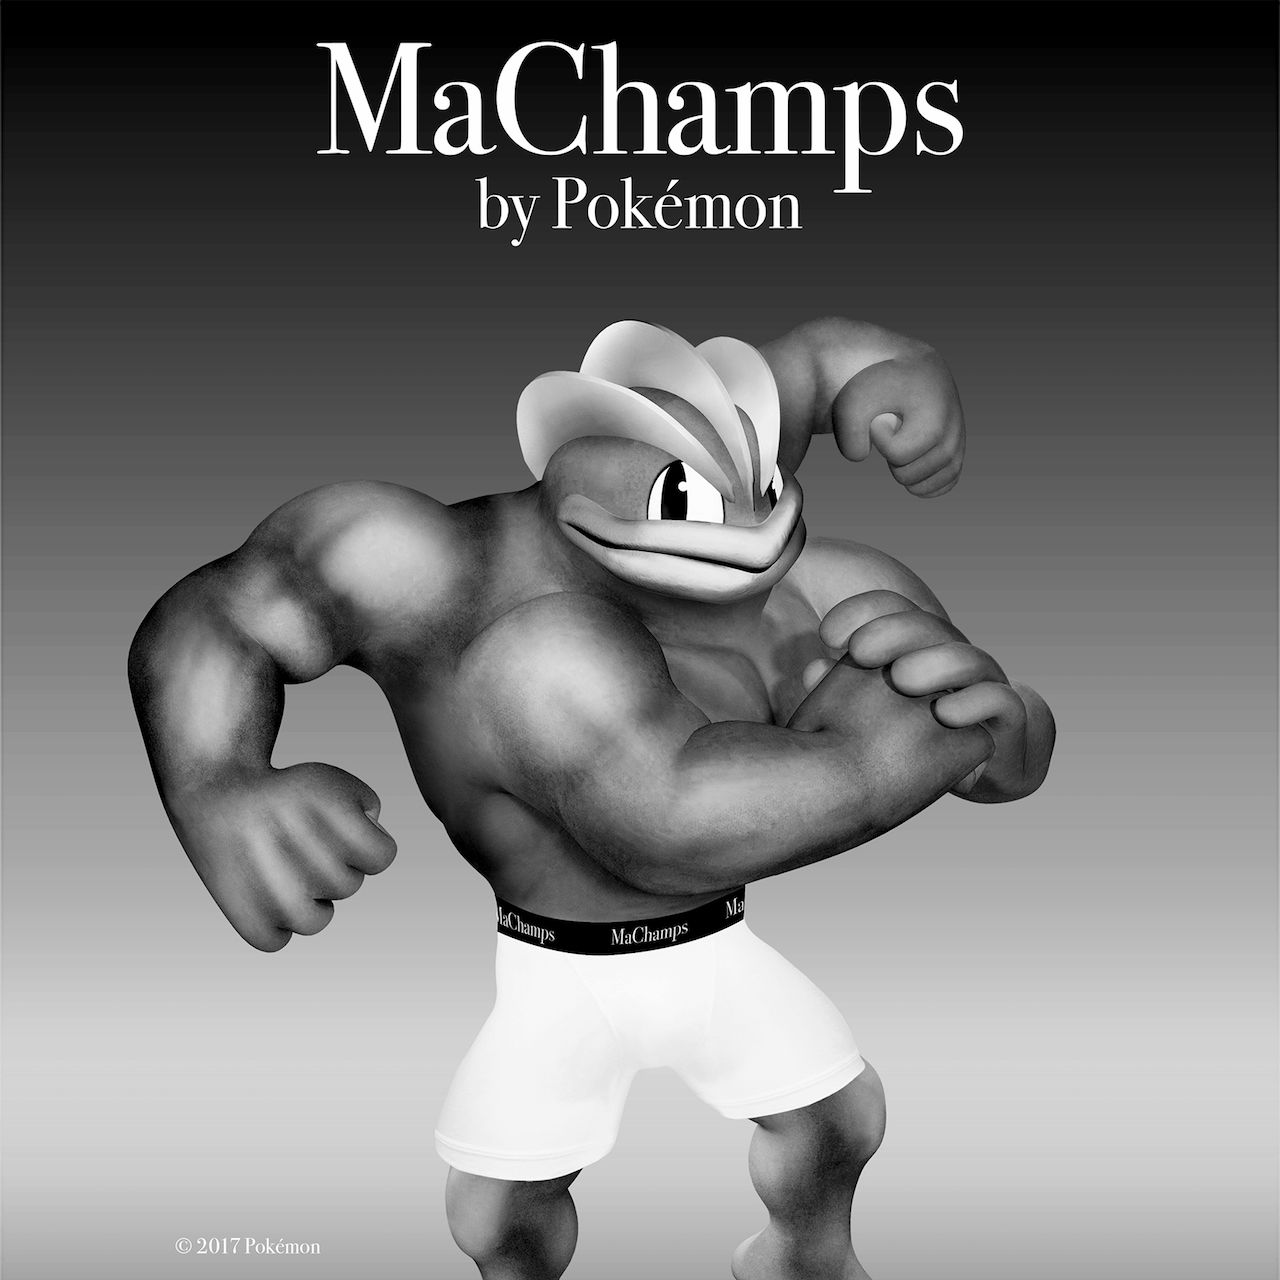 machamps-by-pokemon-image-1